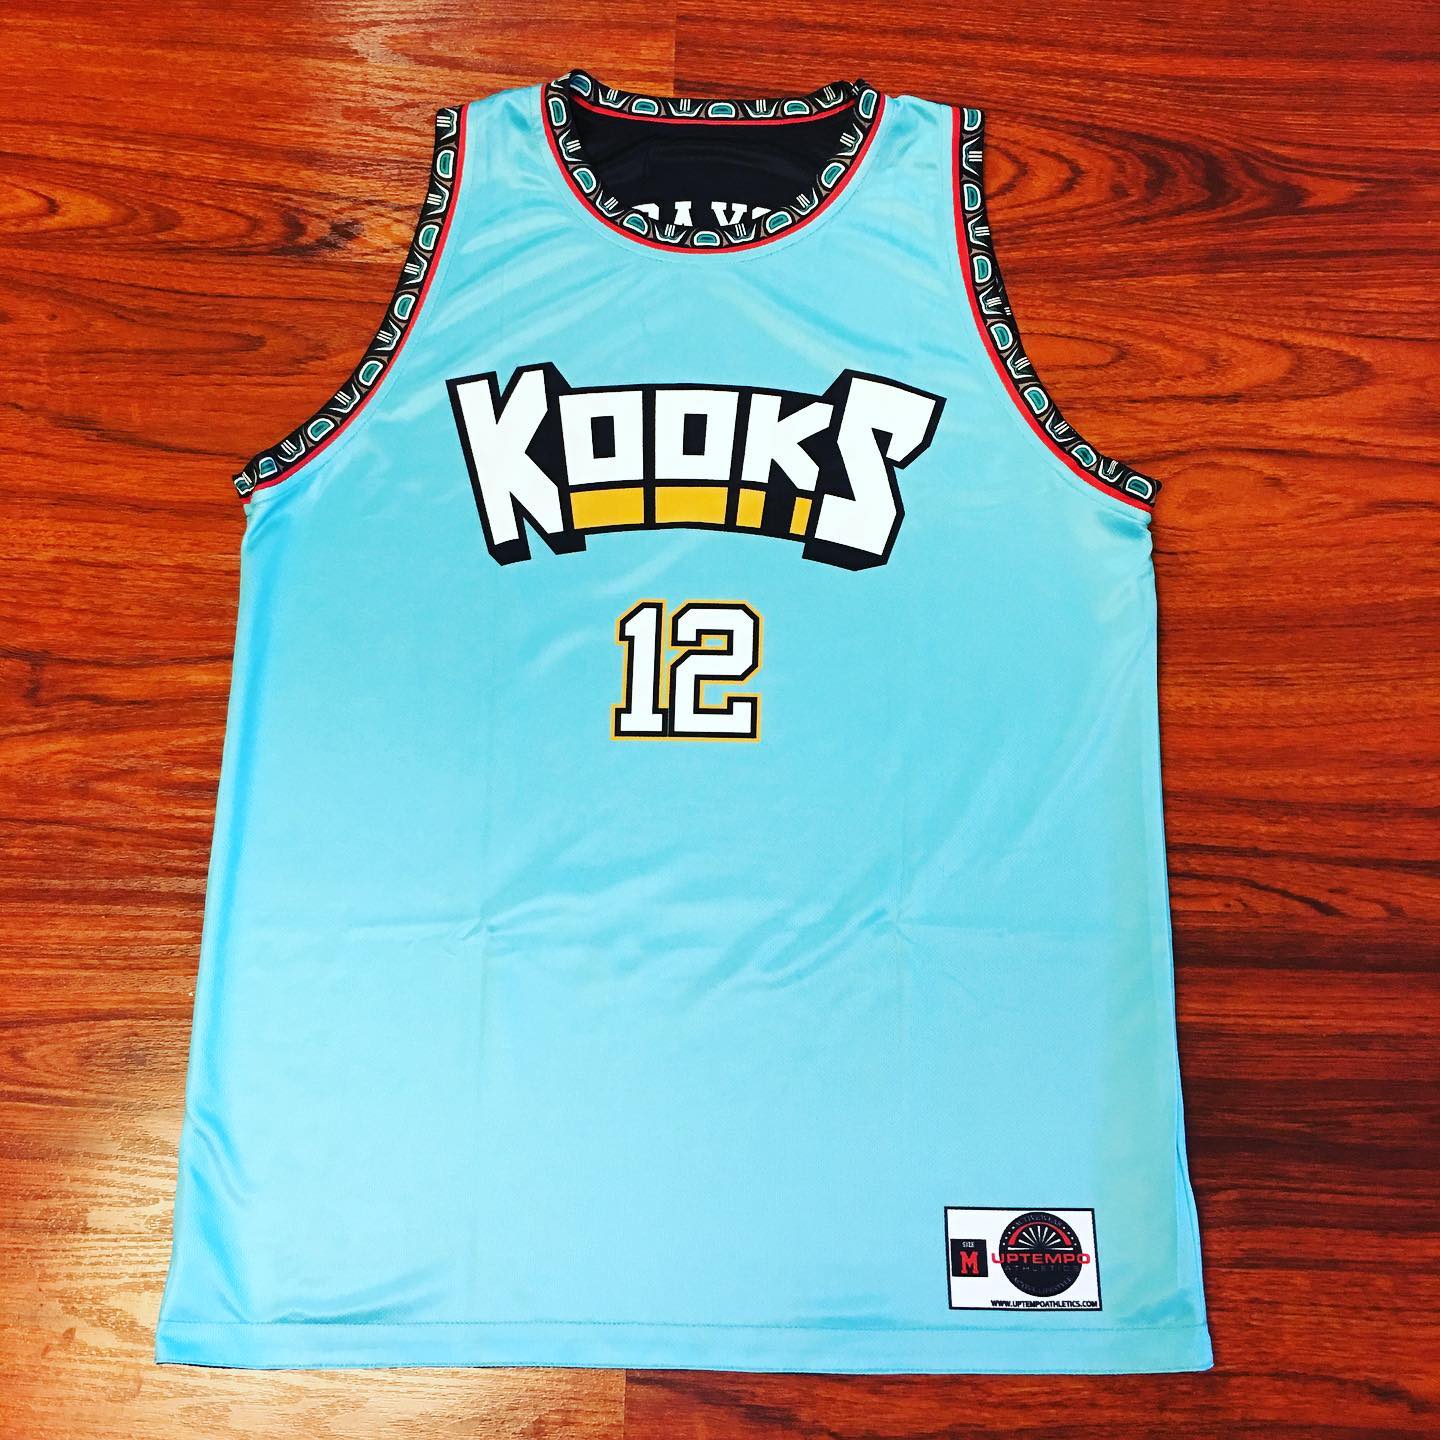 White/Blue Kappa Mens Basketball Jersey Vest XL 